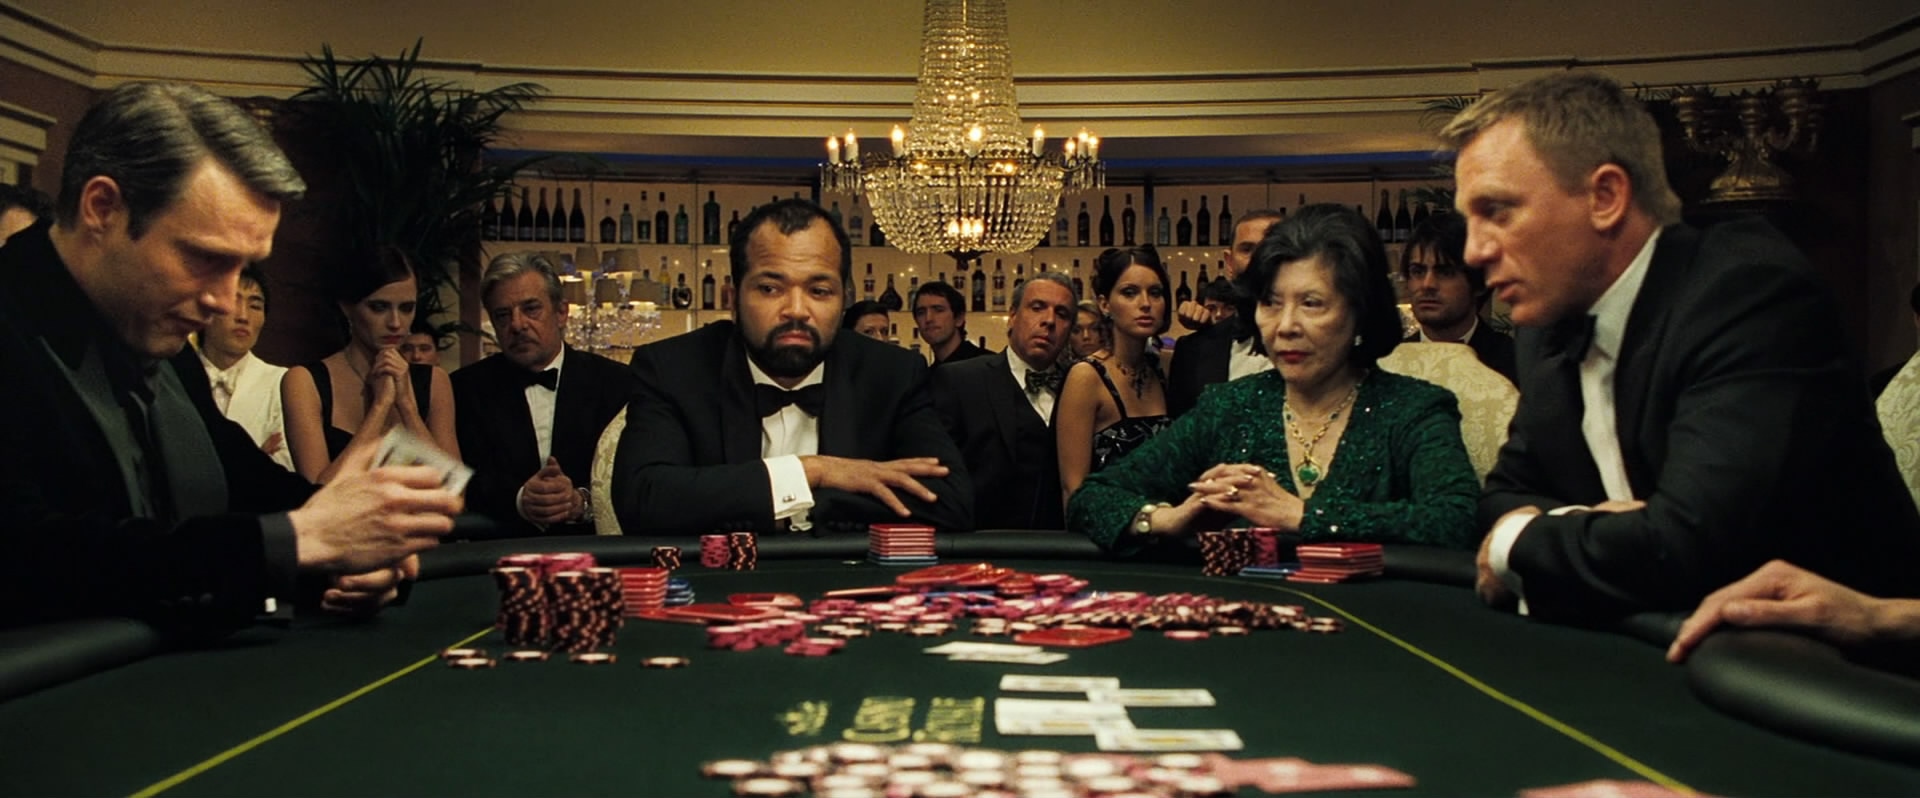 Casino royale music video